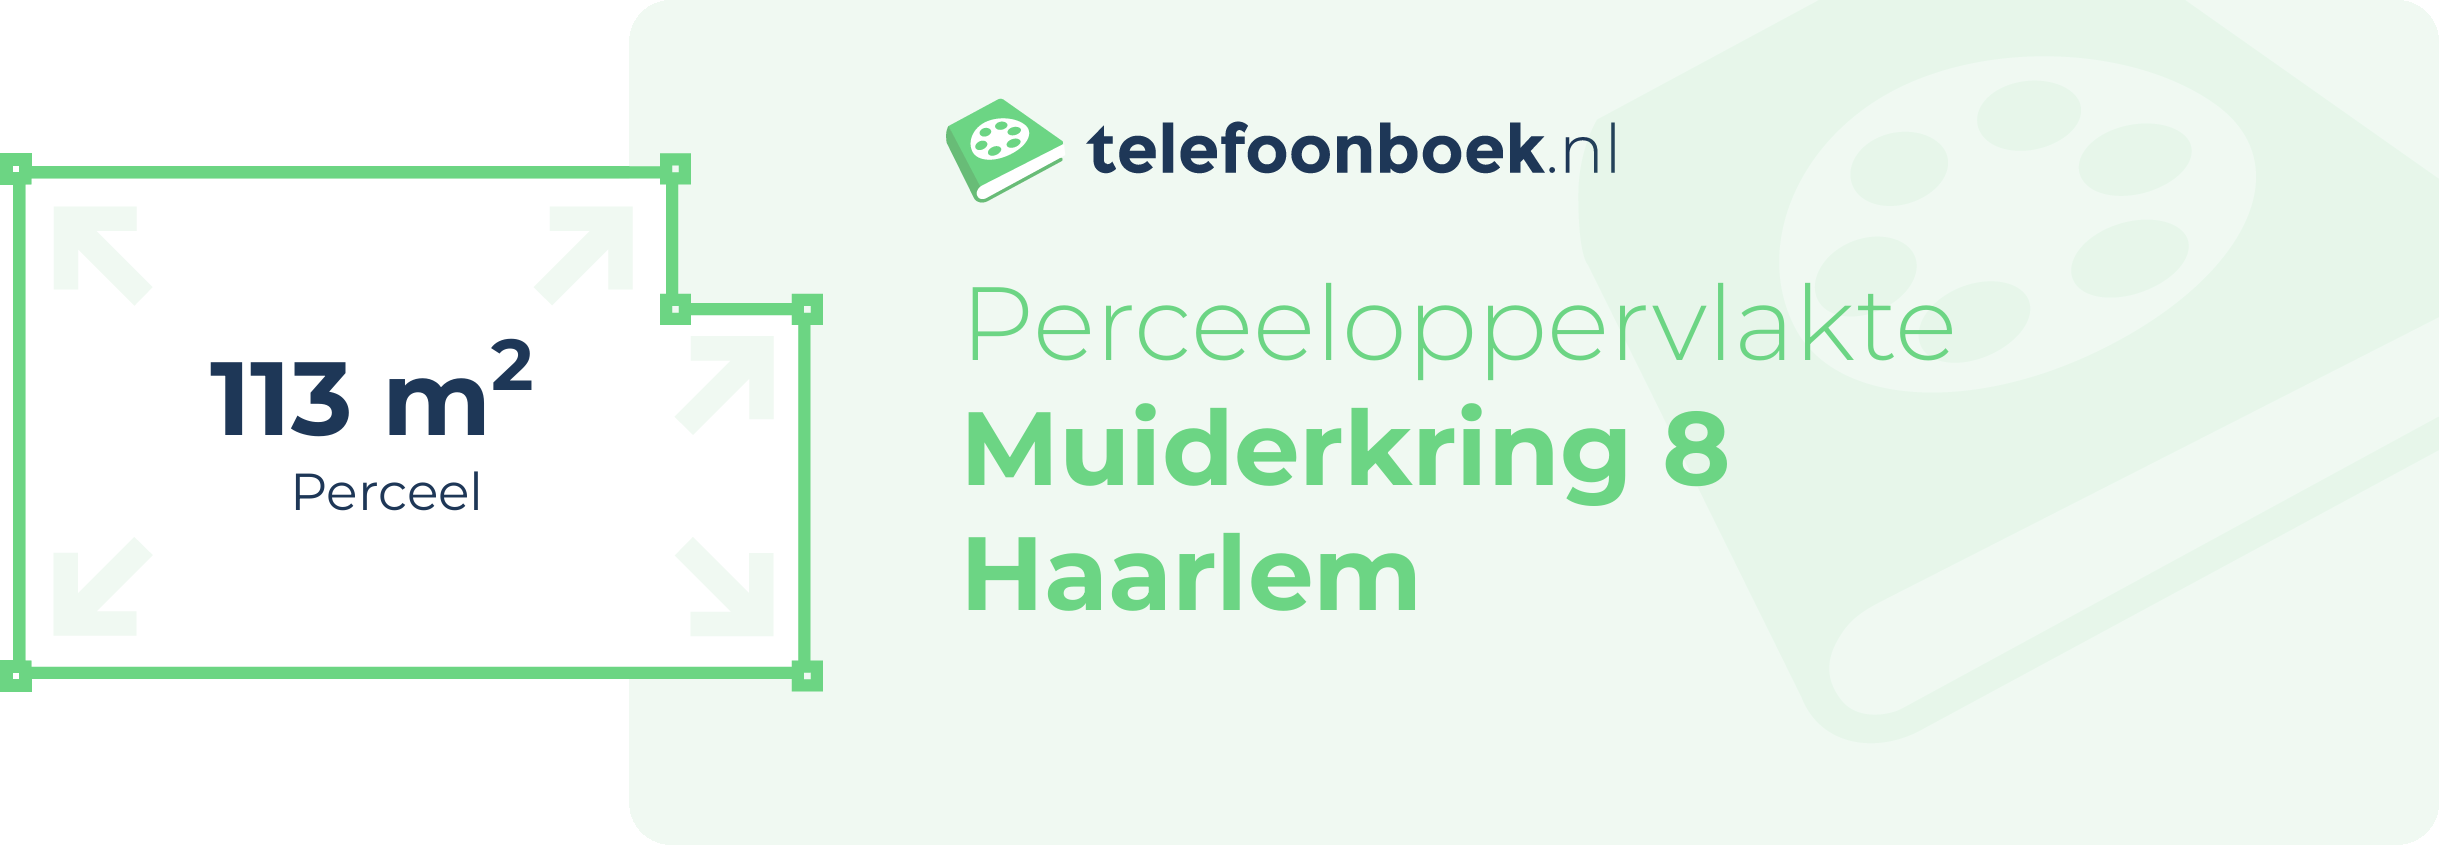 Perceeloppervlakte Muiderkring 8 Haarlem